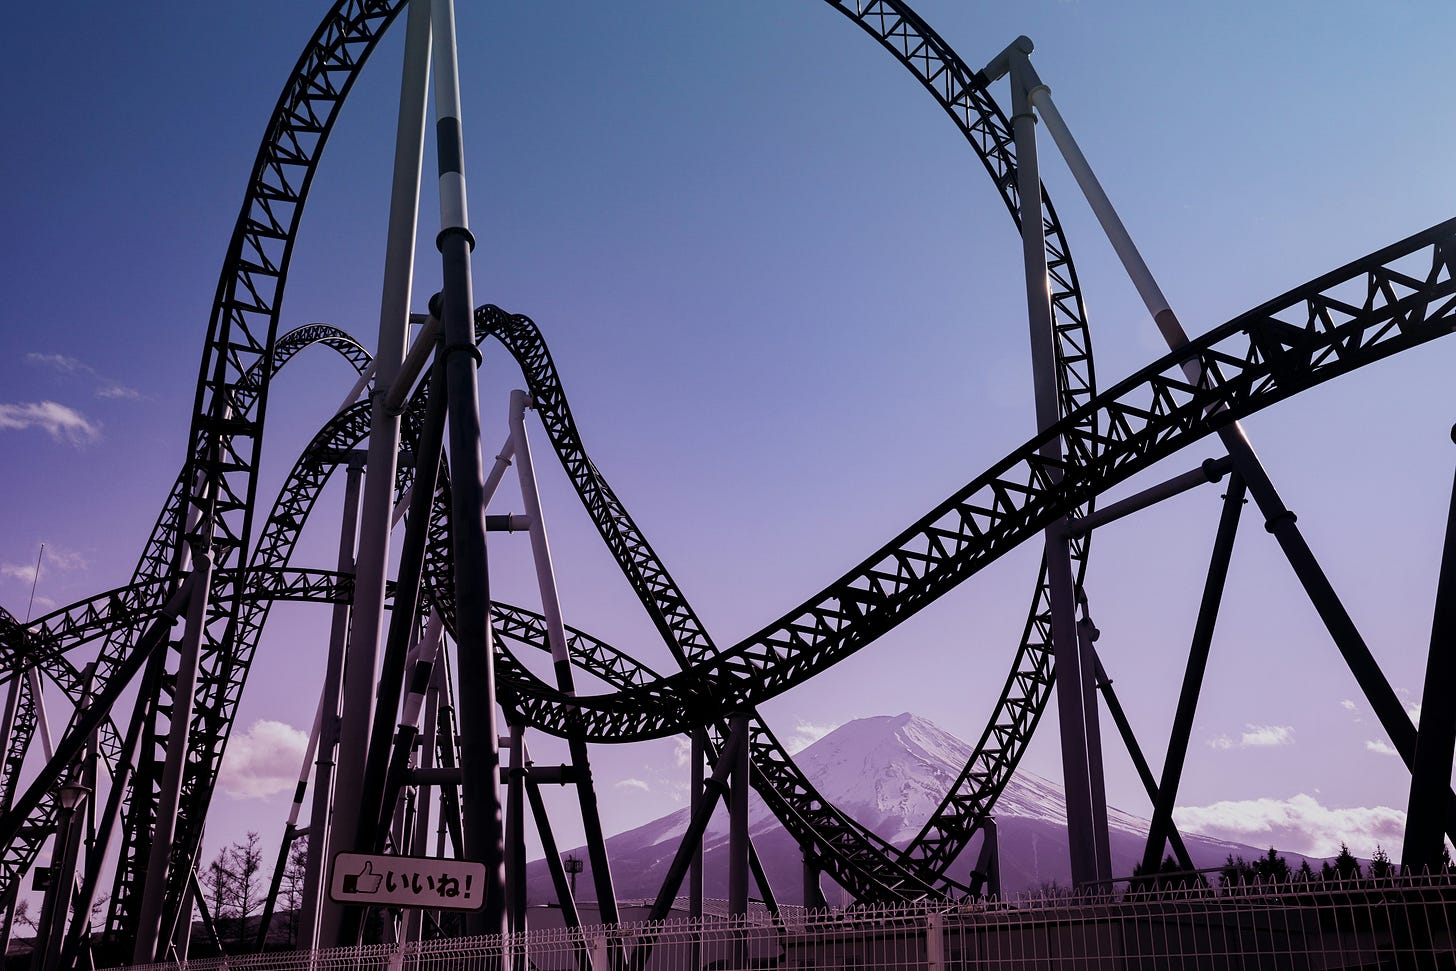 Roller coaster against purple blue sky